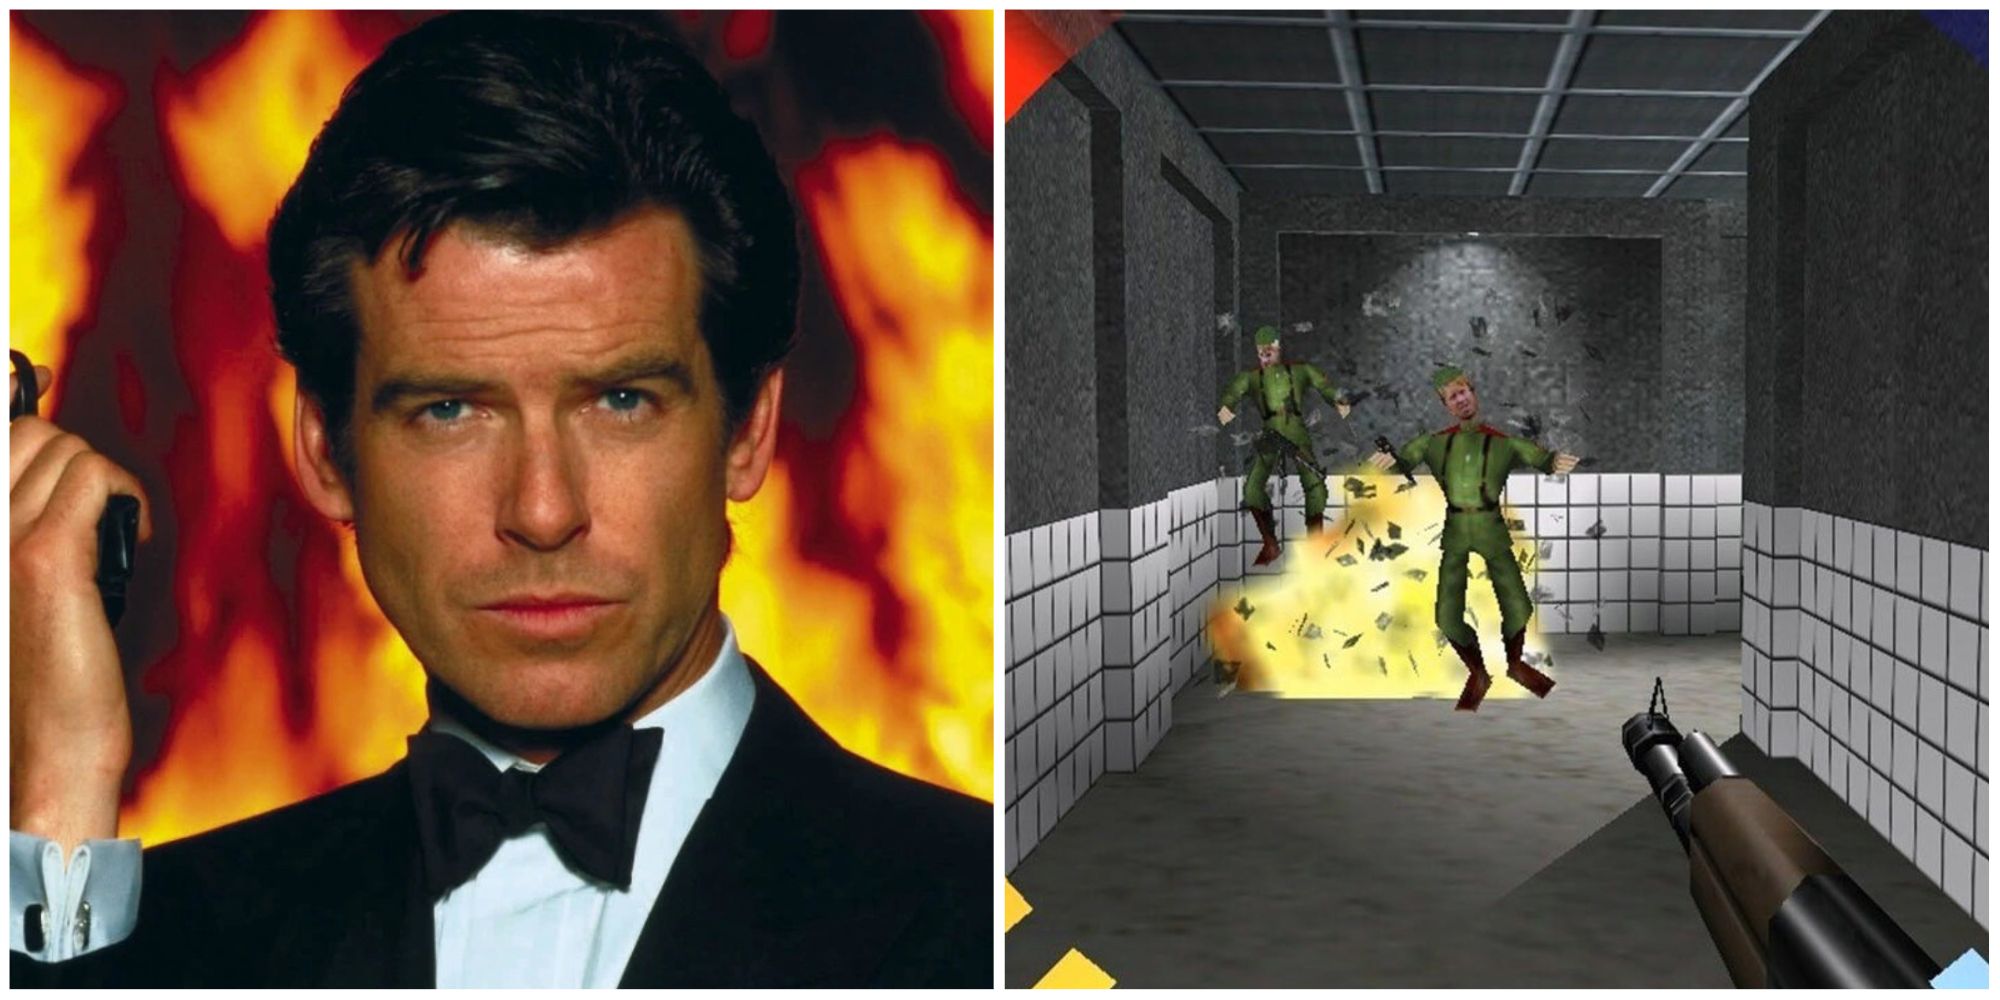 Pierce Brosnan as James Bond & GoldenEye Gameplay